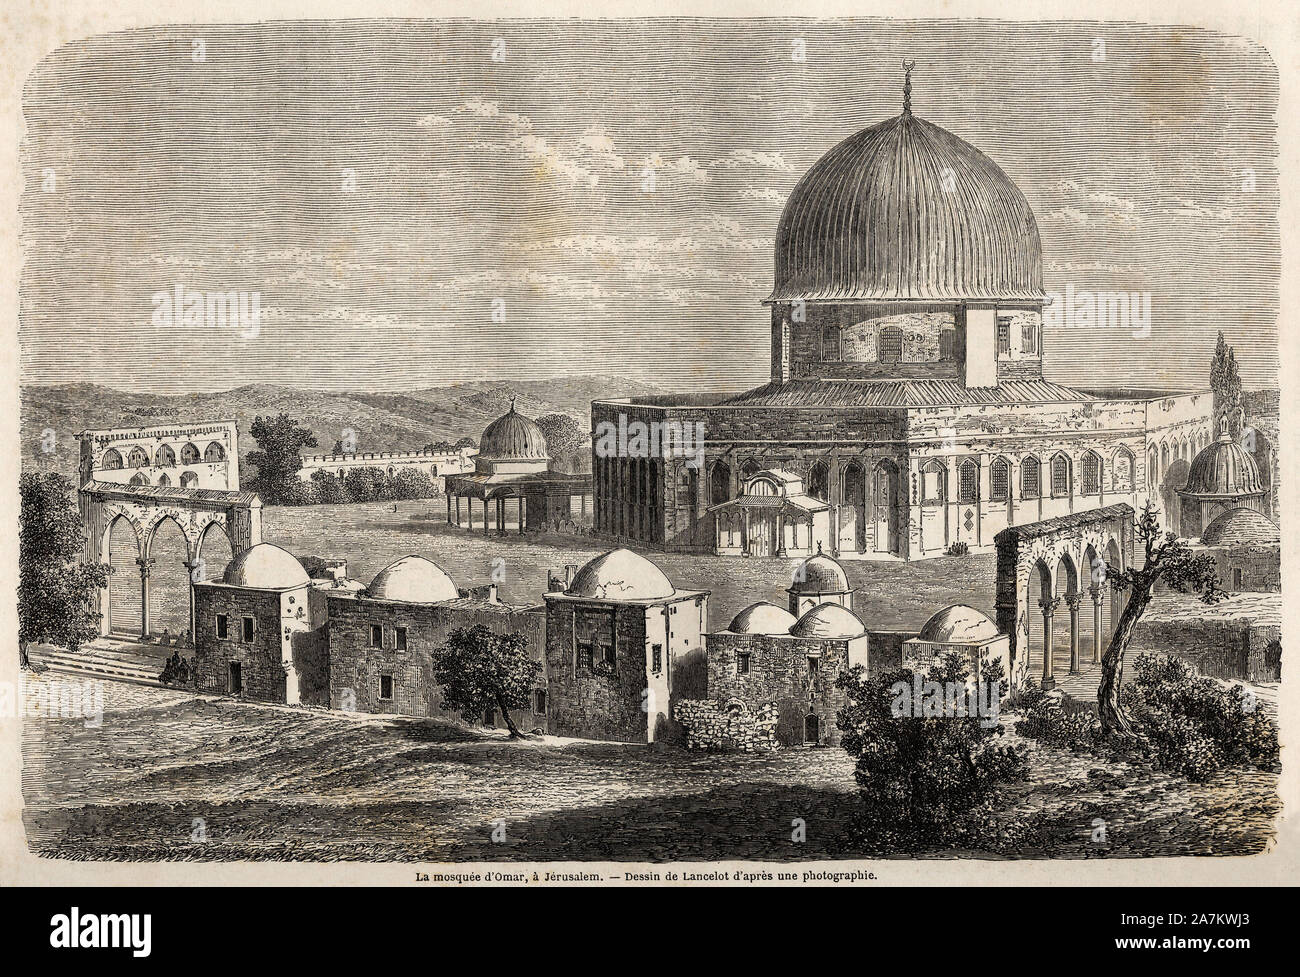 La mosquee d'Omar, edifiee en 691, Jerusalem, dessin de Lancelot, Gießen illustrer Le Voyage en Palästina, en 1856, de M. Bida. Tiefdruck in "Le Tour du Stockfoto